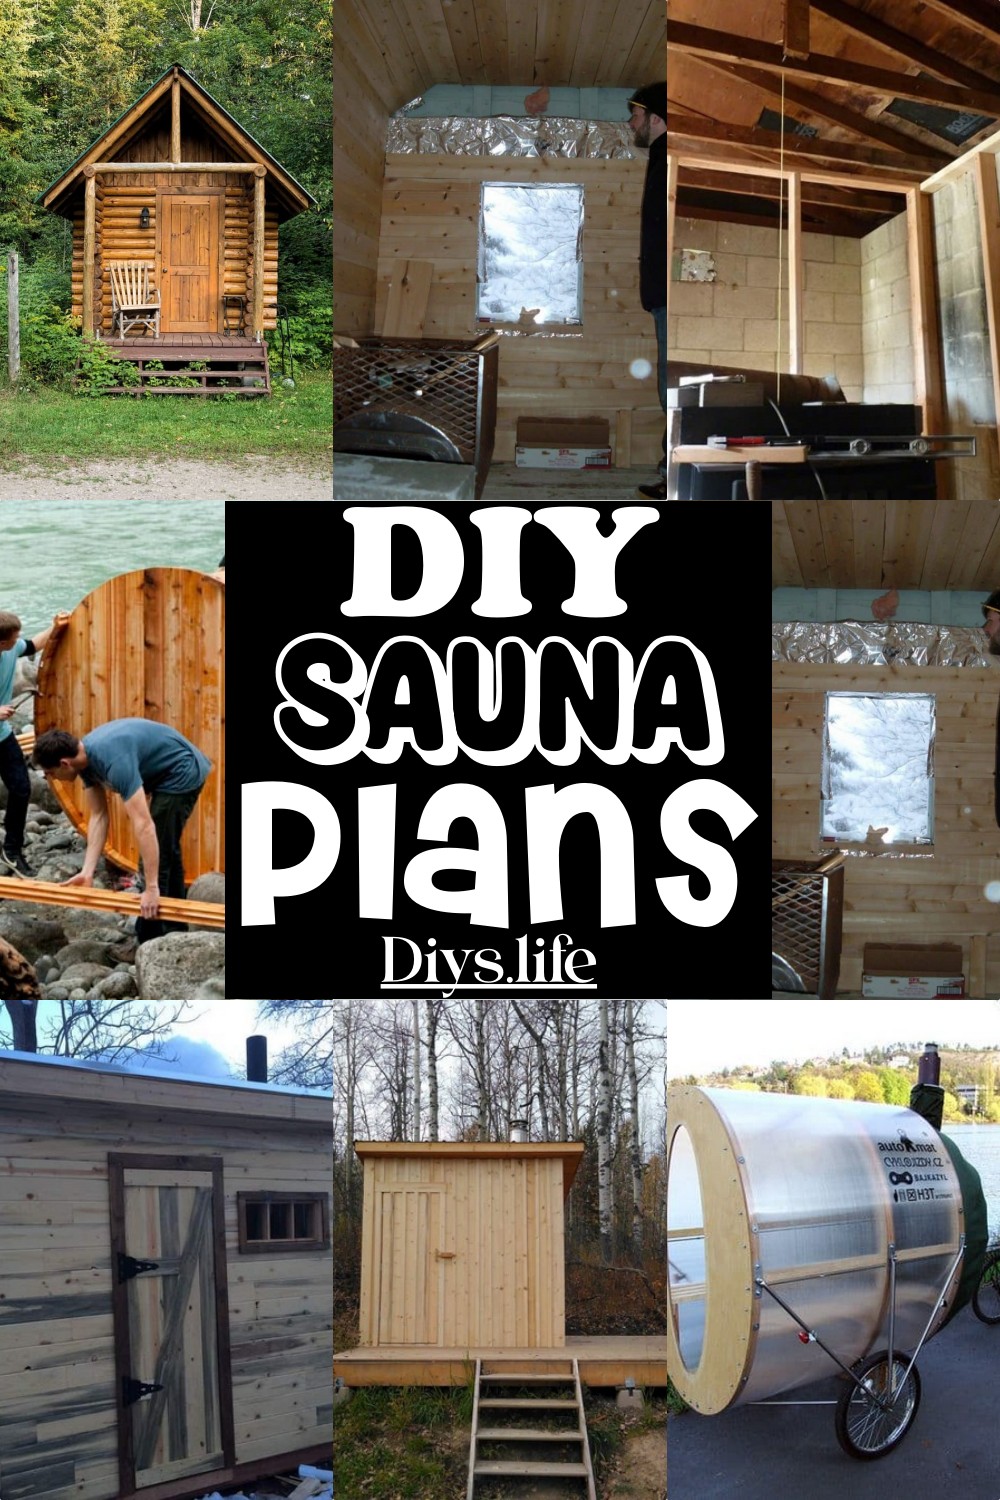 DIY Sauna Plans for steam baths